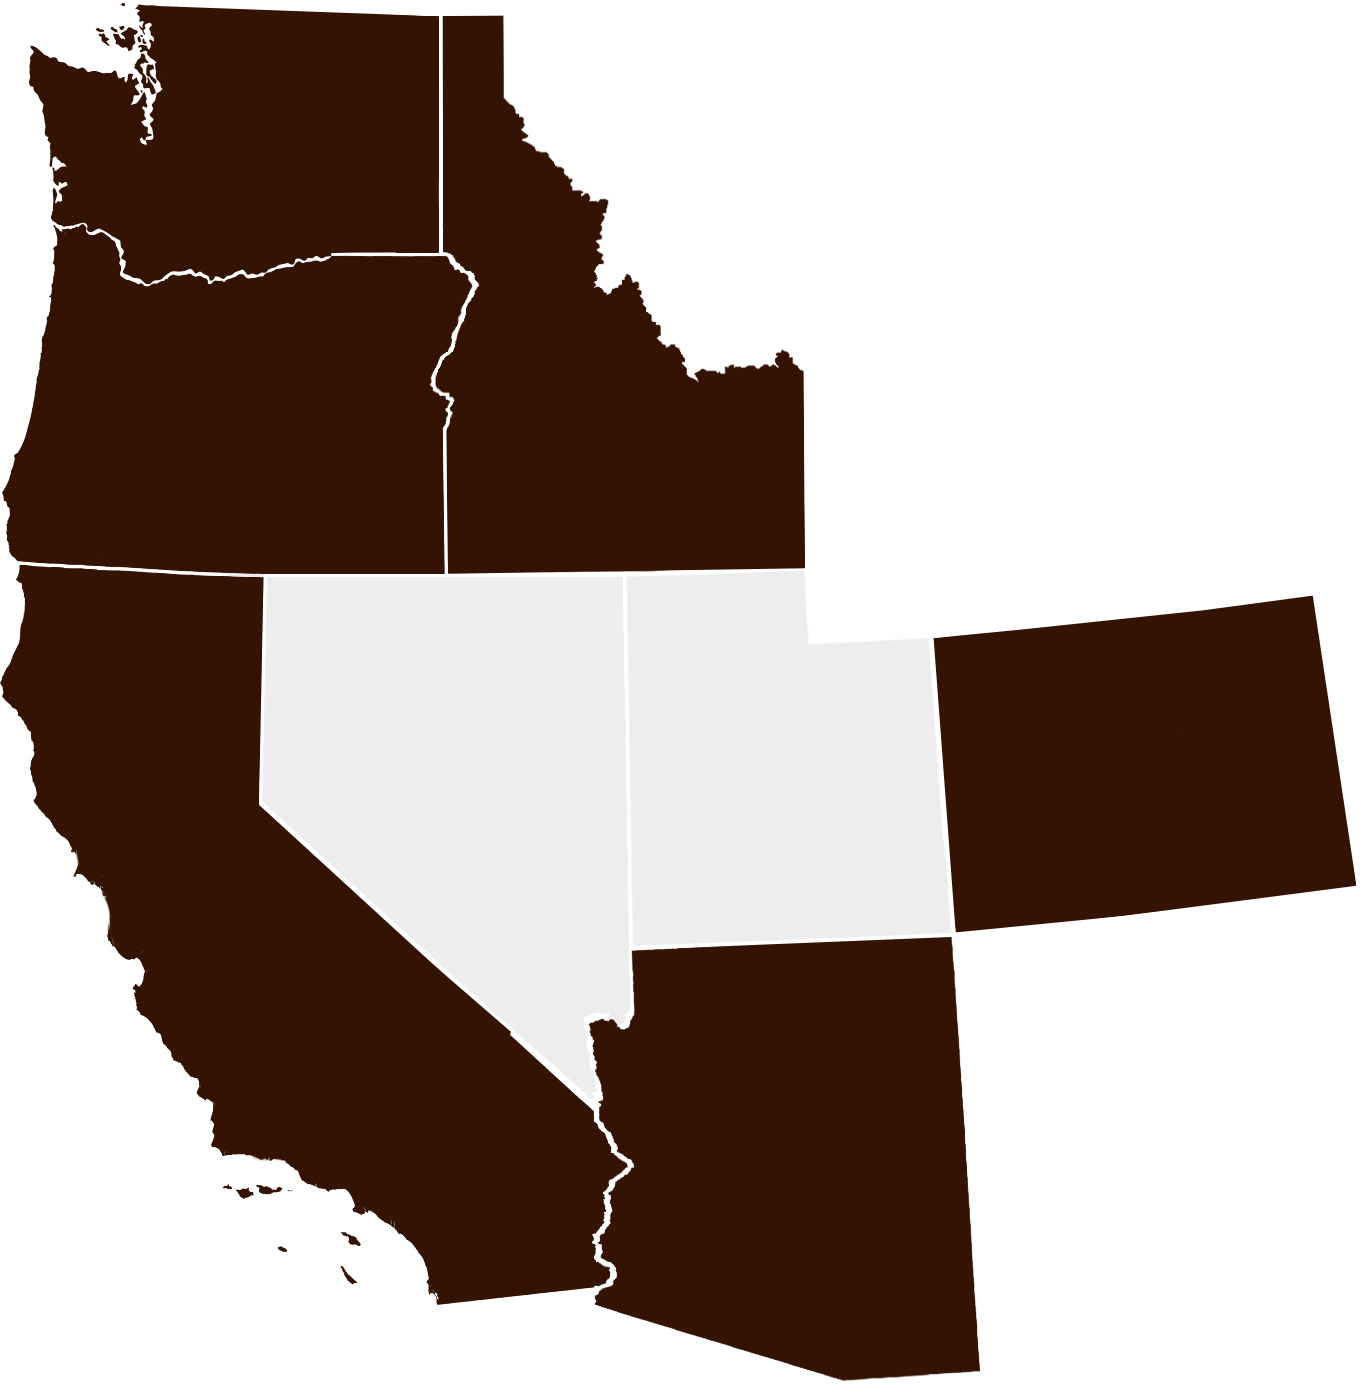 Map of WBCP, Inc. clients in Washington, Oregon, Idaho, California, Arizona, and Colorado